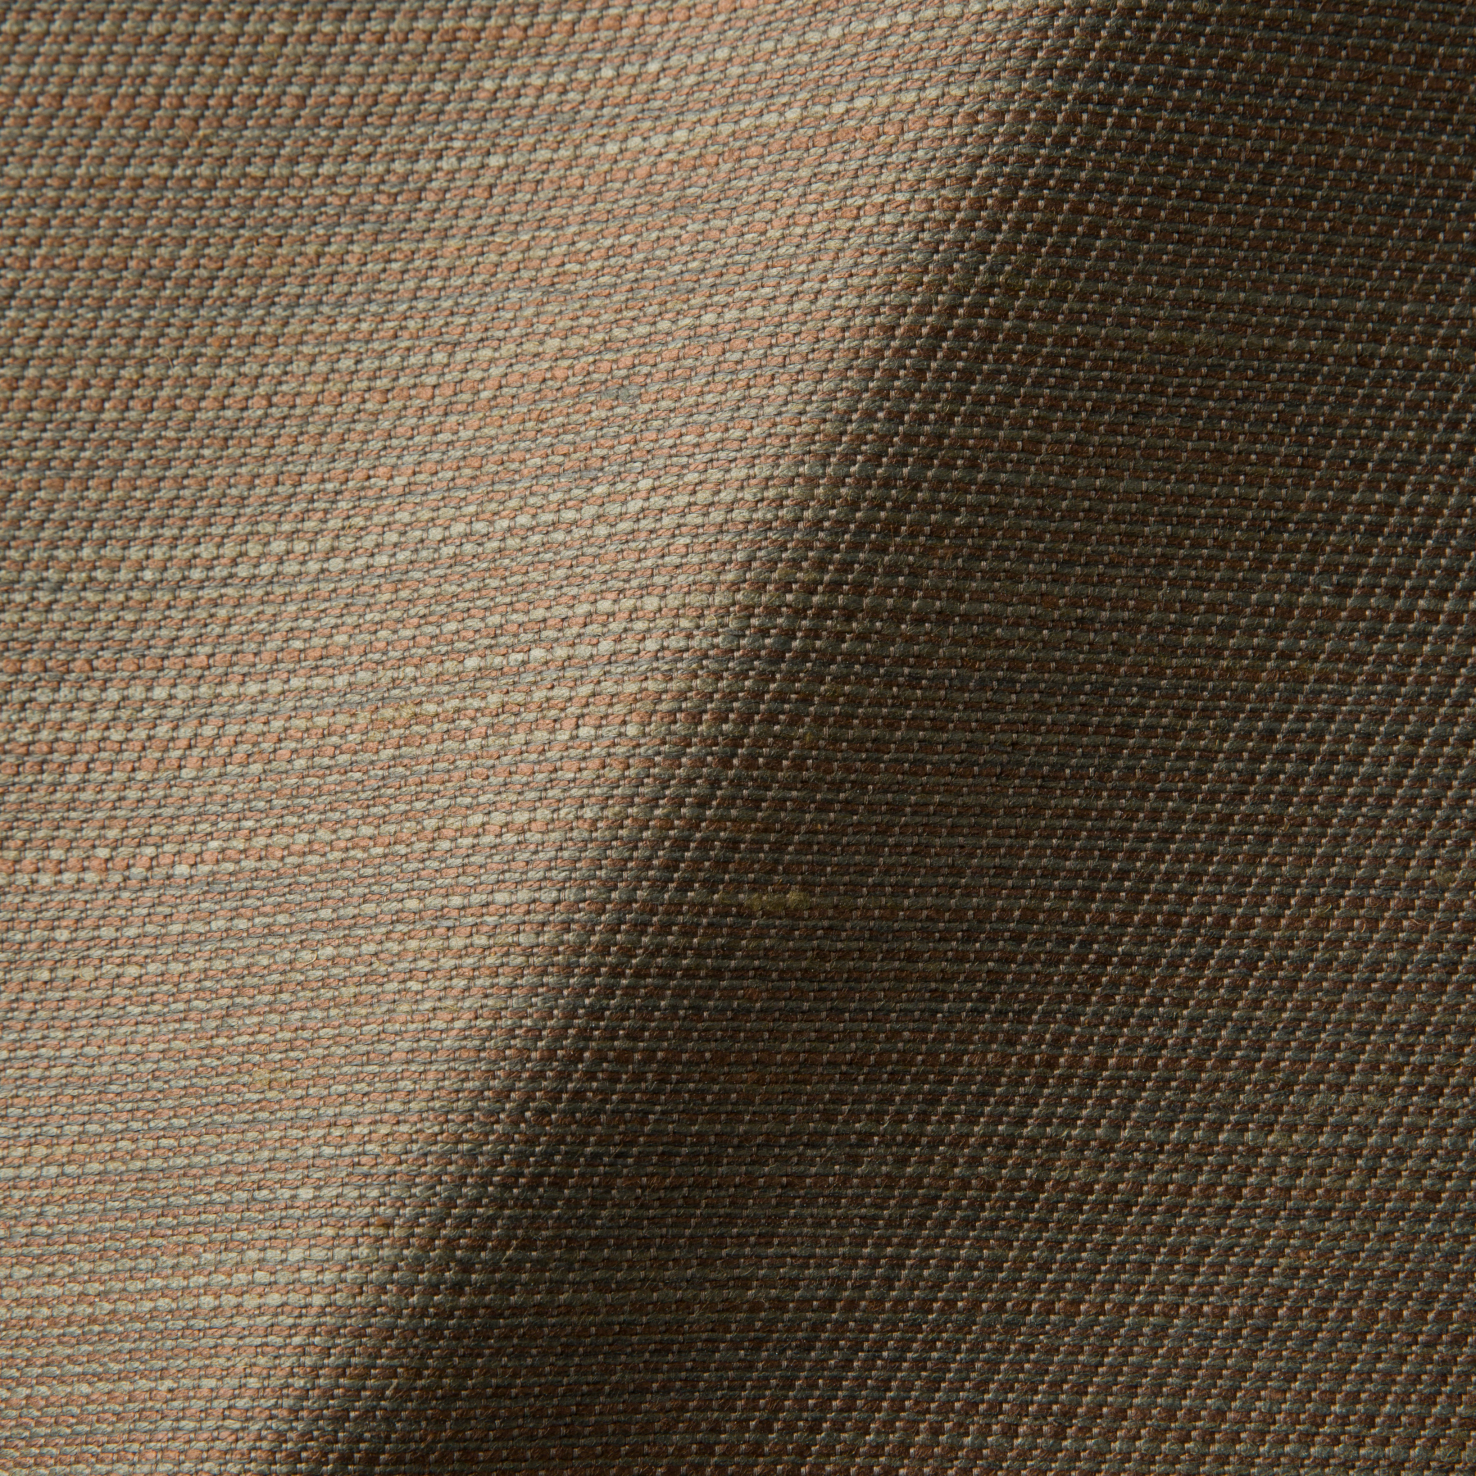 Fabric sample Oray Ray copper brown